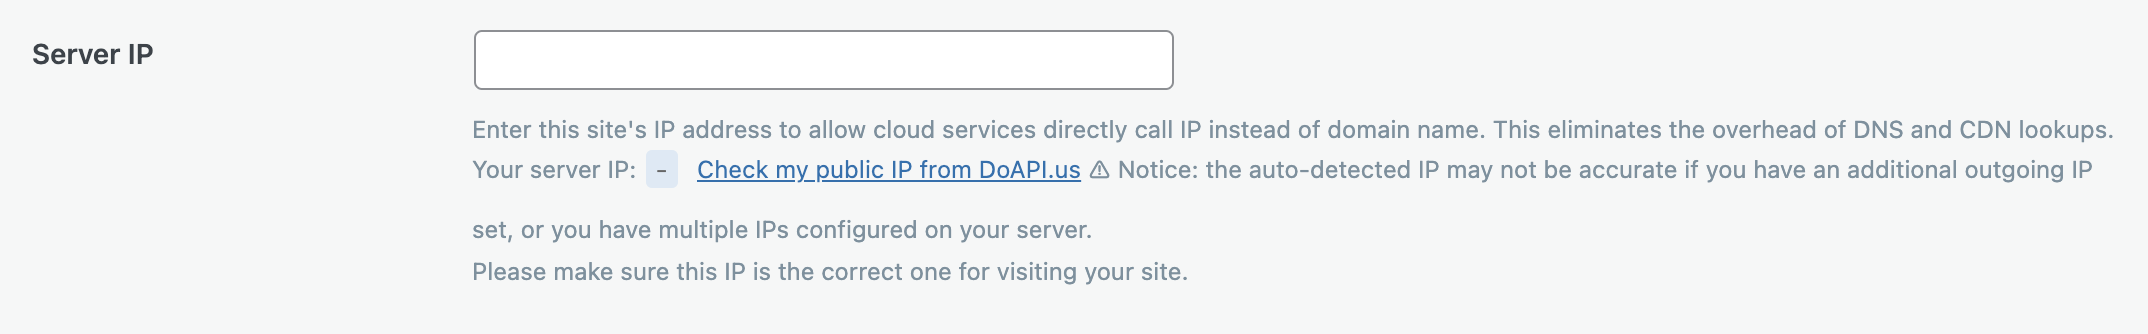 Server IP address setting